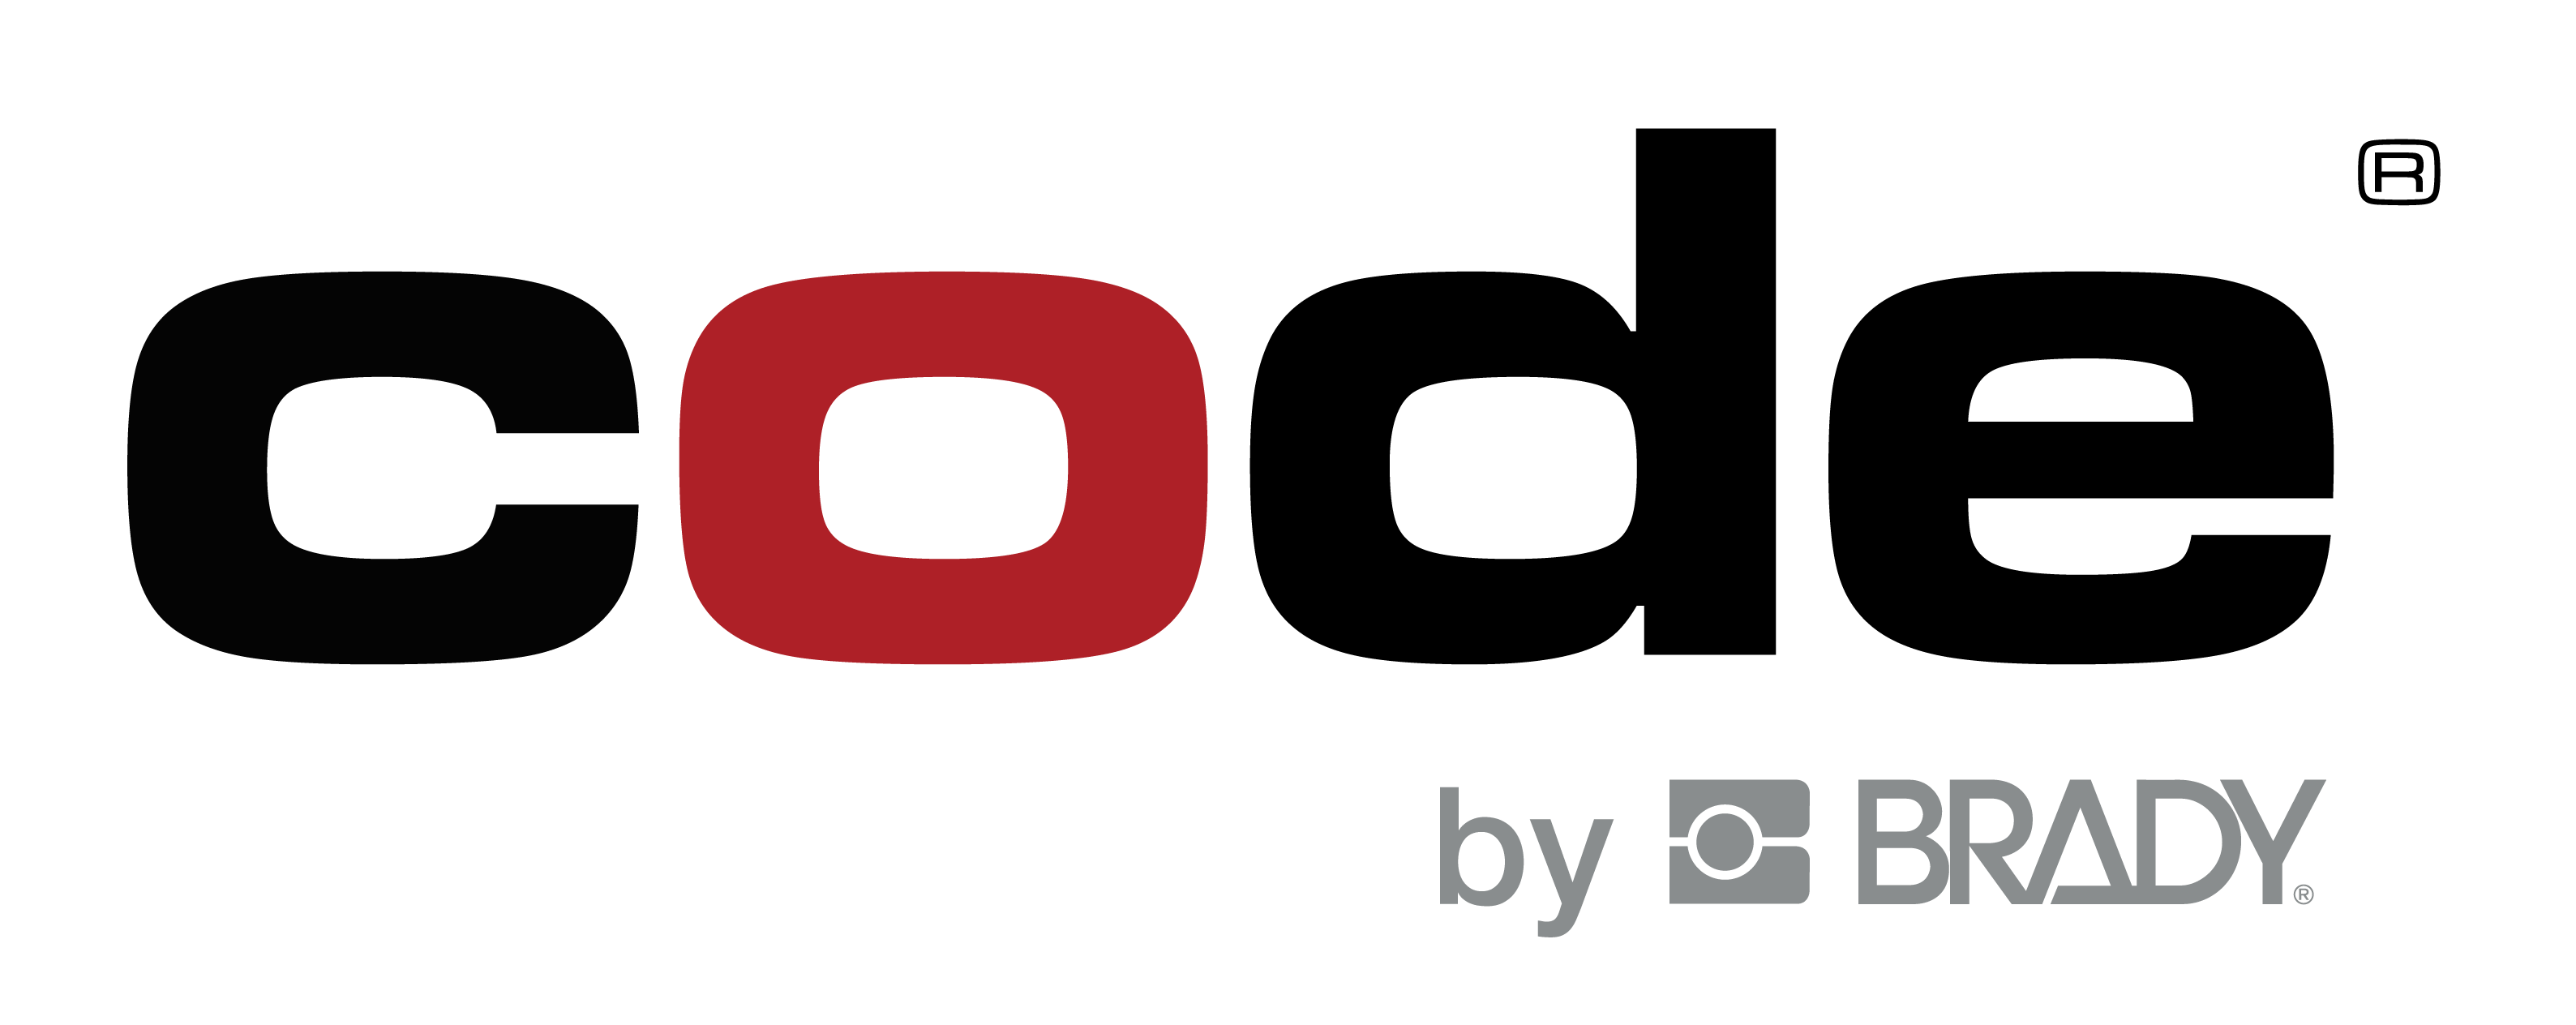 202010-code_logo